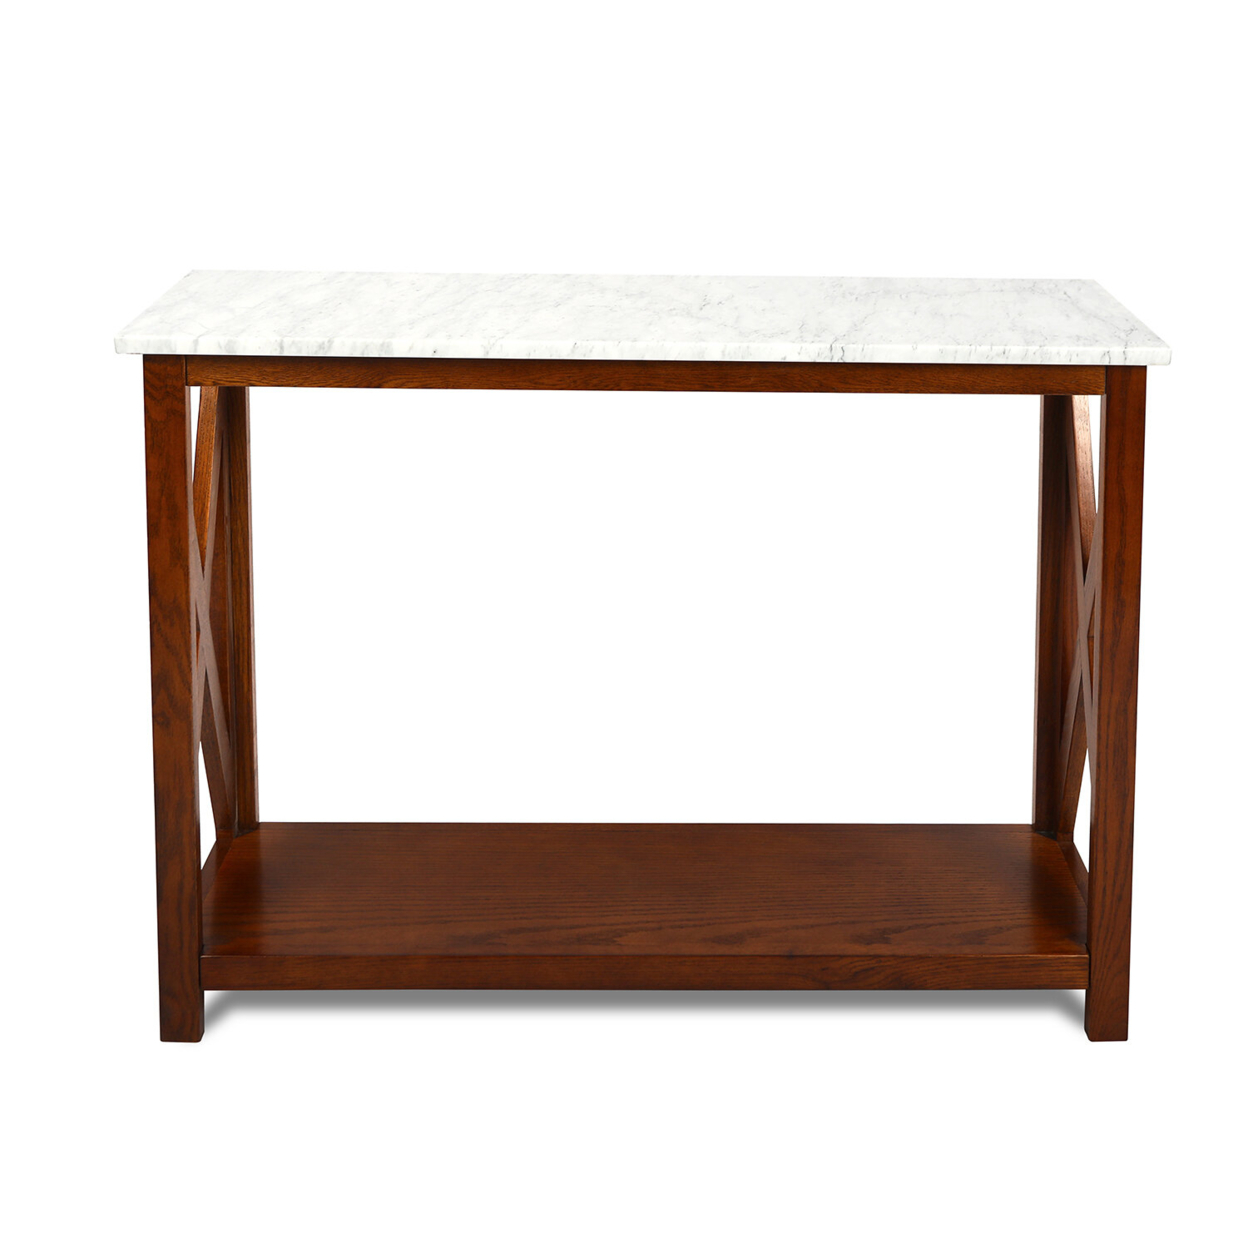 Agatha 39" Rectangular Italian Carrara White Marble Console Table with solid wood Legs - Walnut Leg